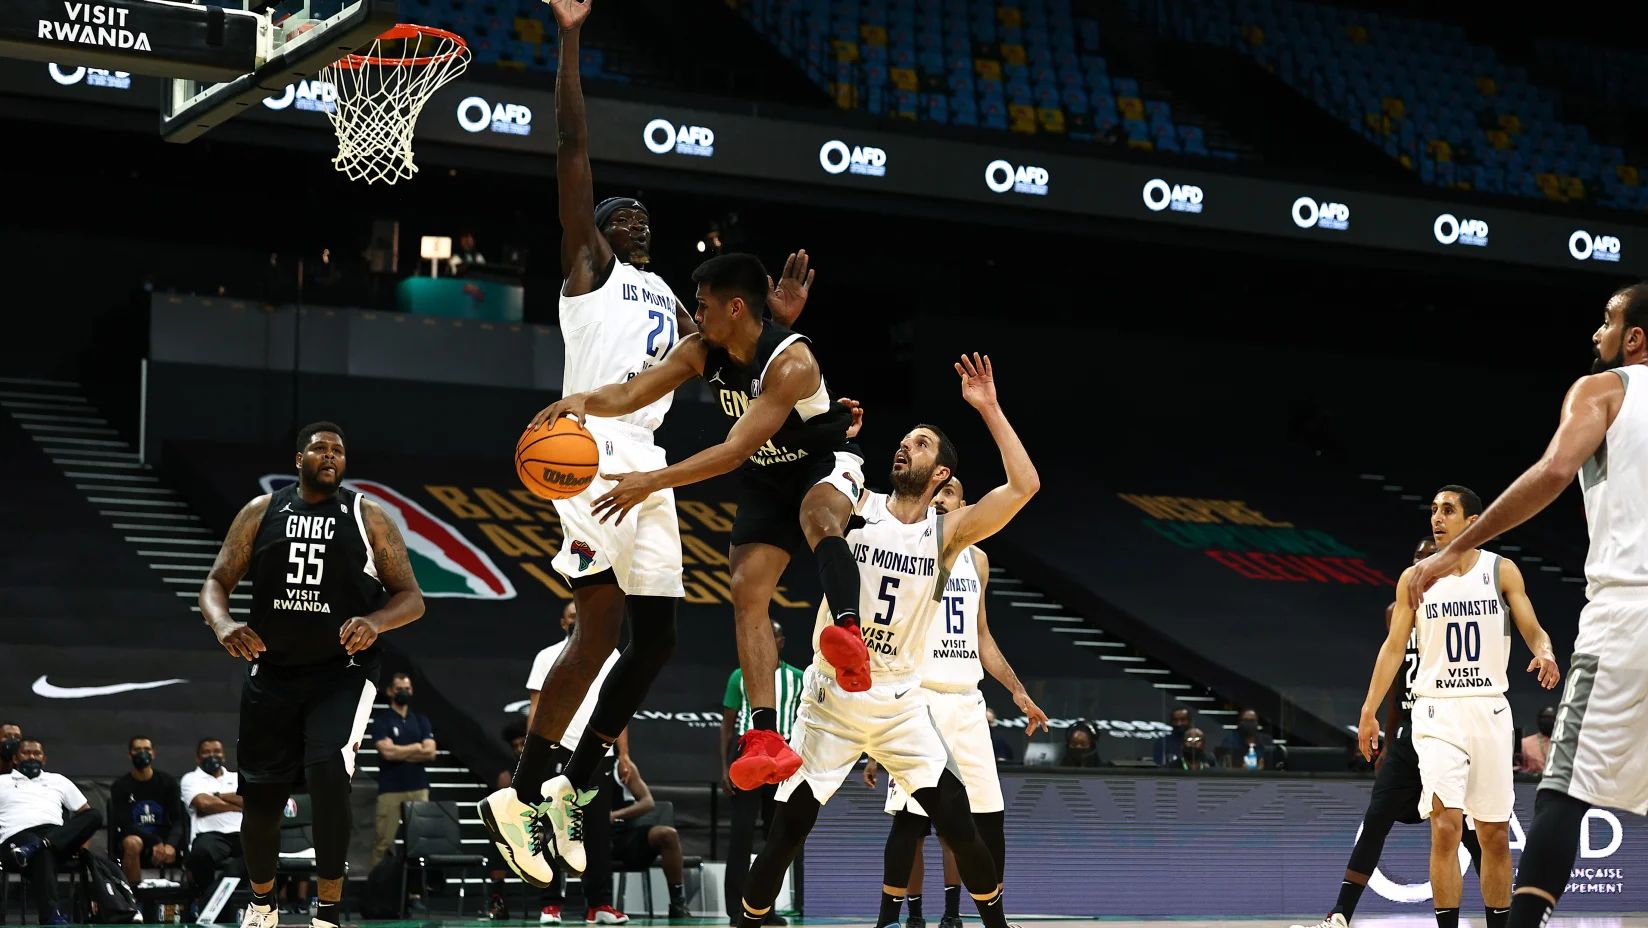 Basketball Africa League : l'US Monastir humilie la GNBC du Madagascar 